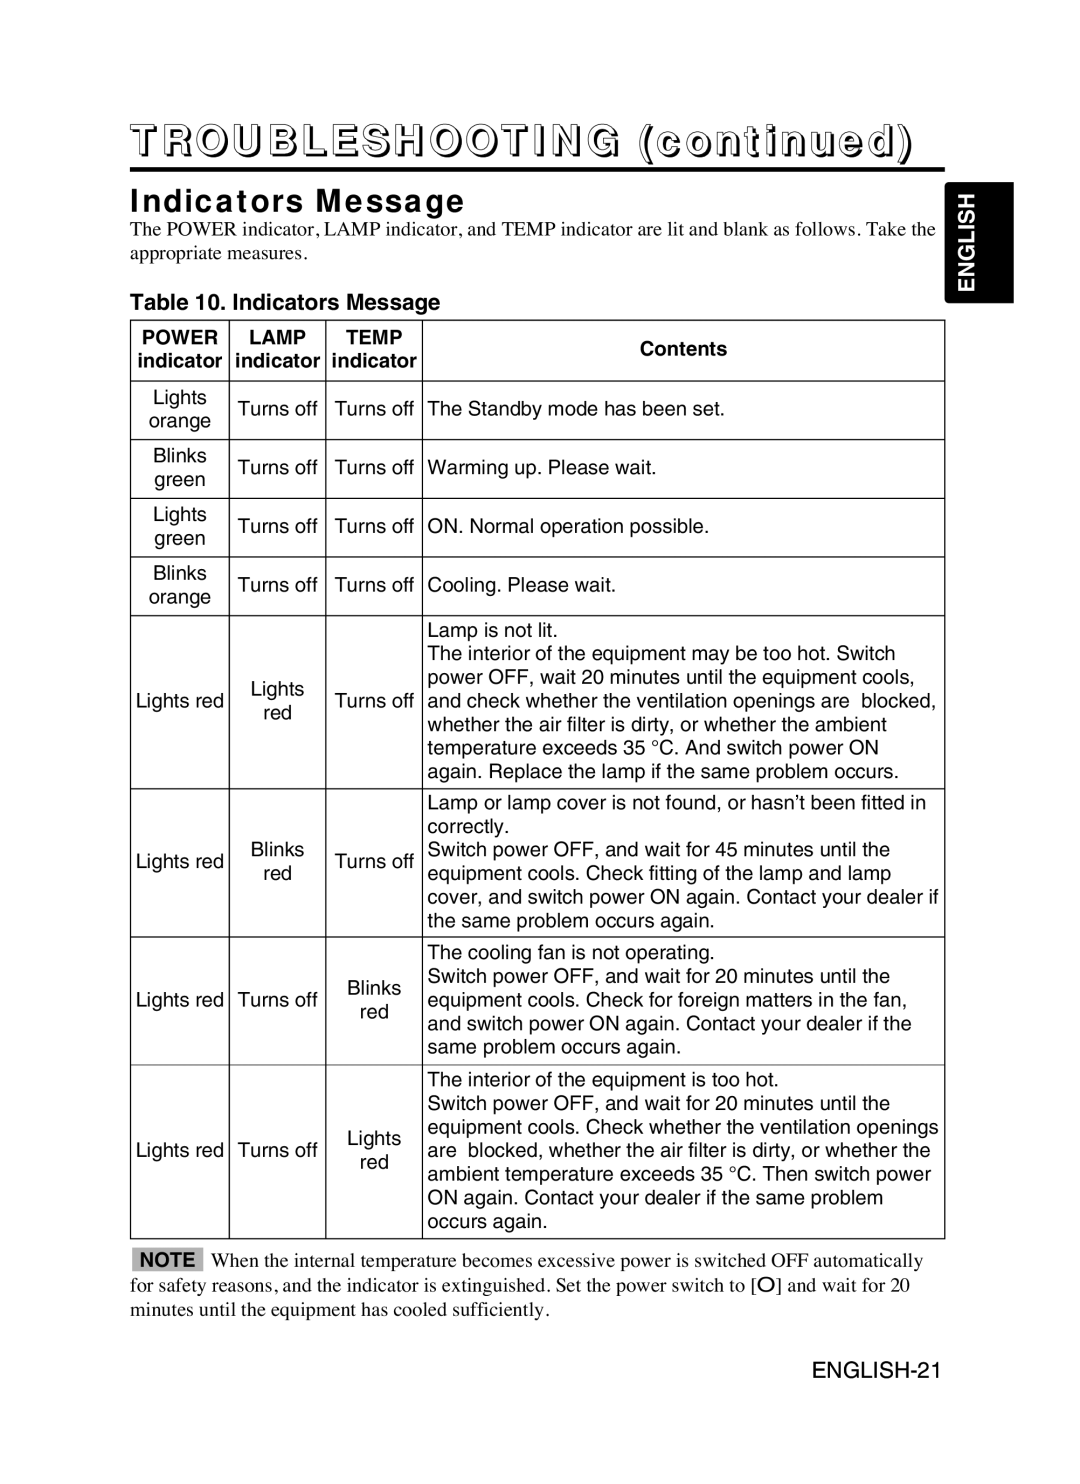 Proxima ASA DP6870 manual TROUBLESHOOTING continued, Indicators Message, English 